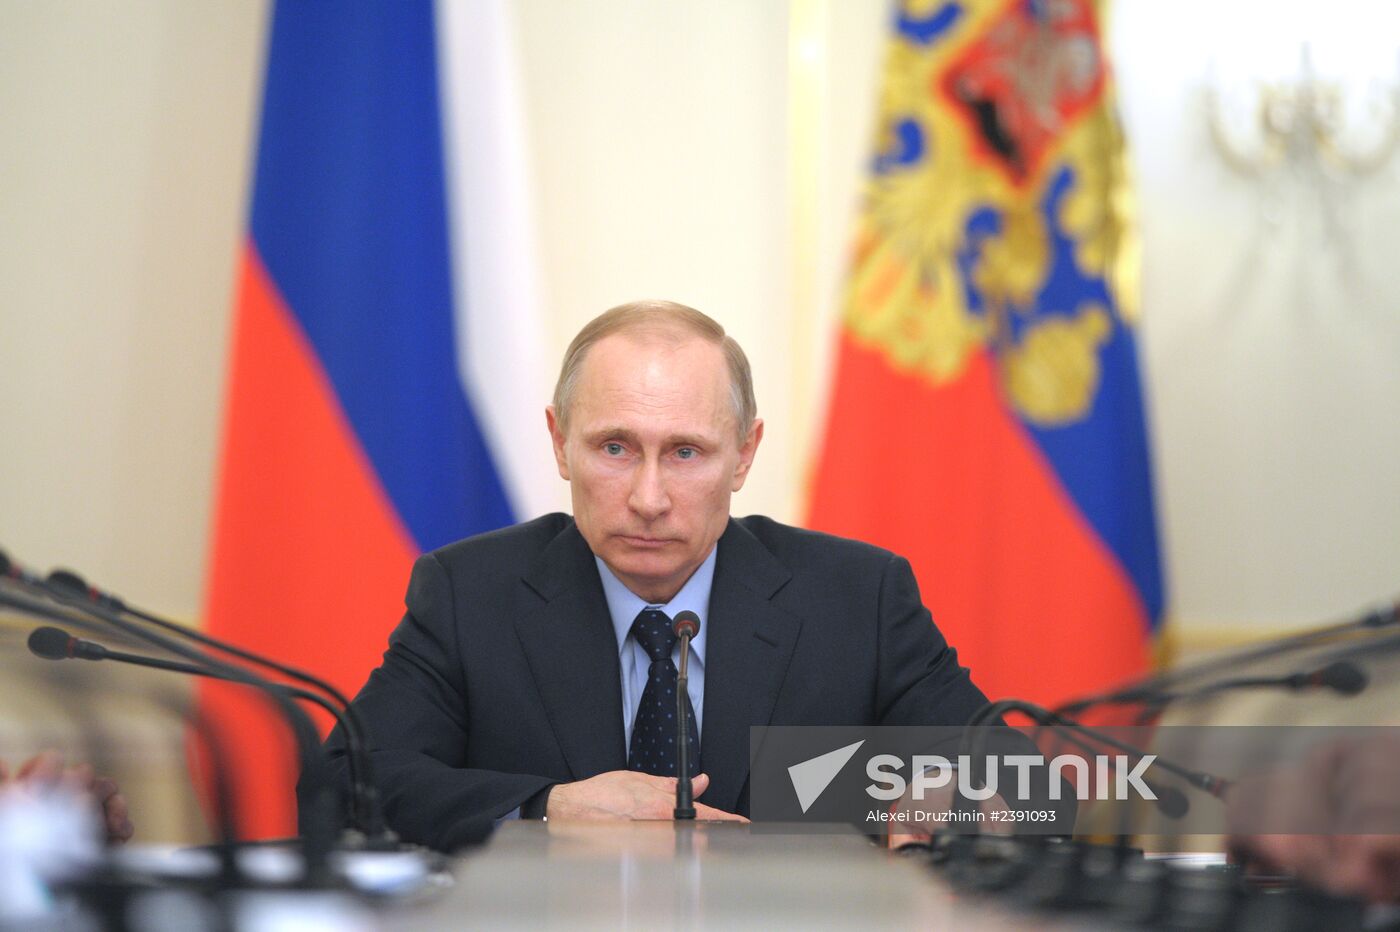 Vladimir Putin chairs Russian government meeting